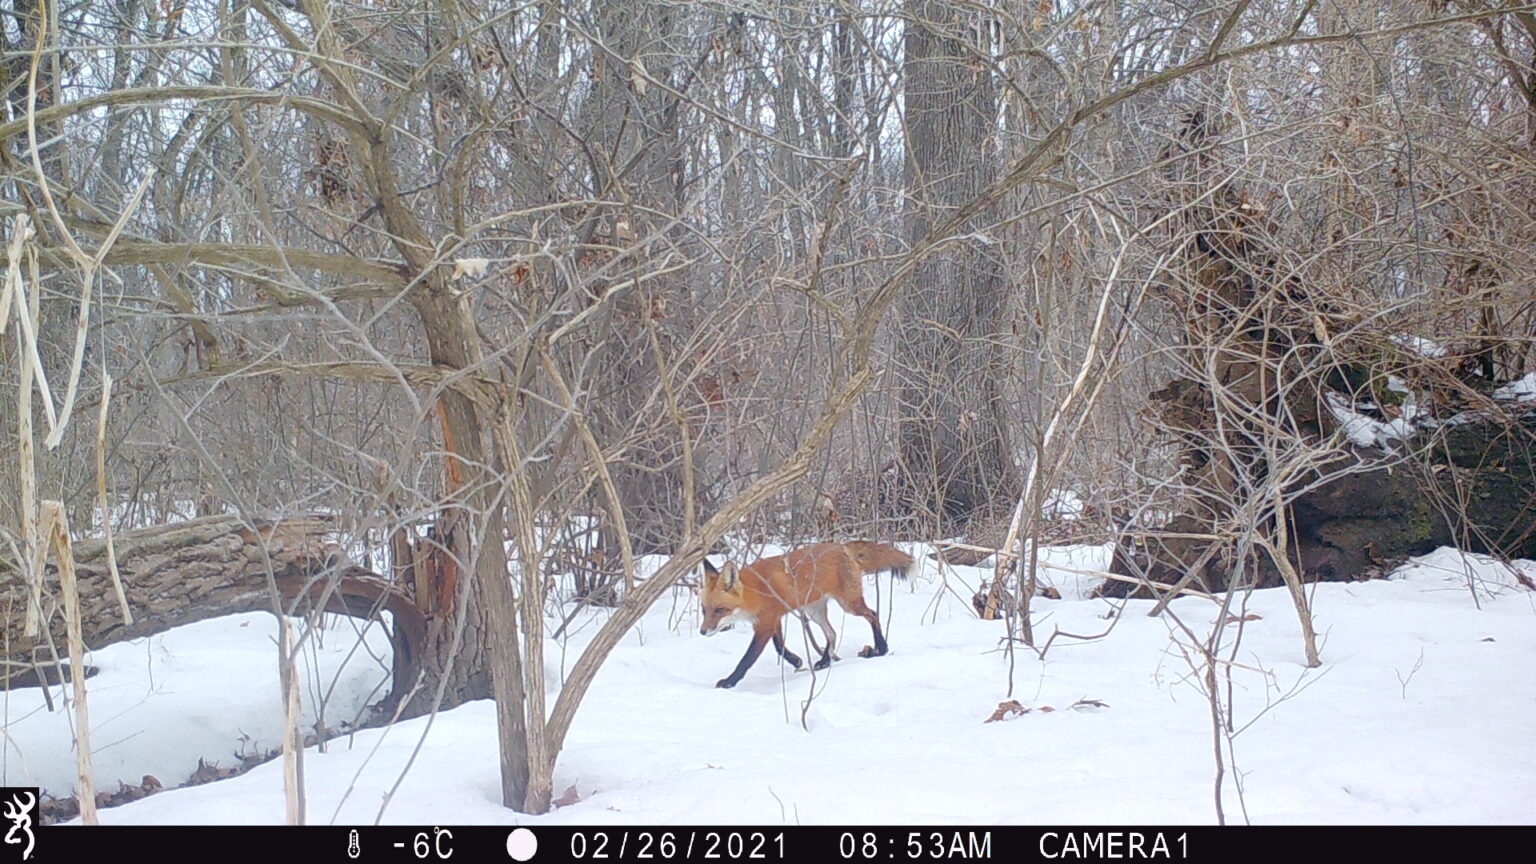 A fox walks across the snowy woods